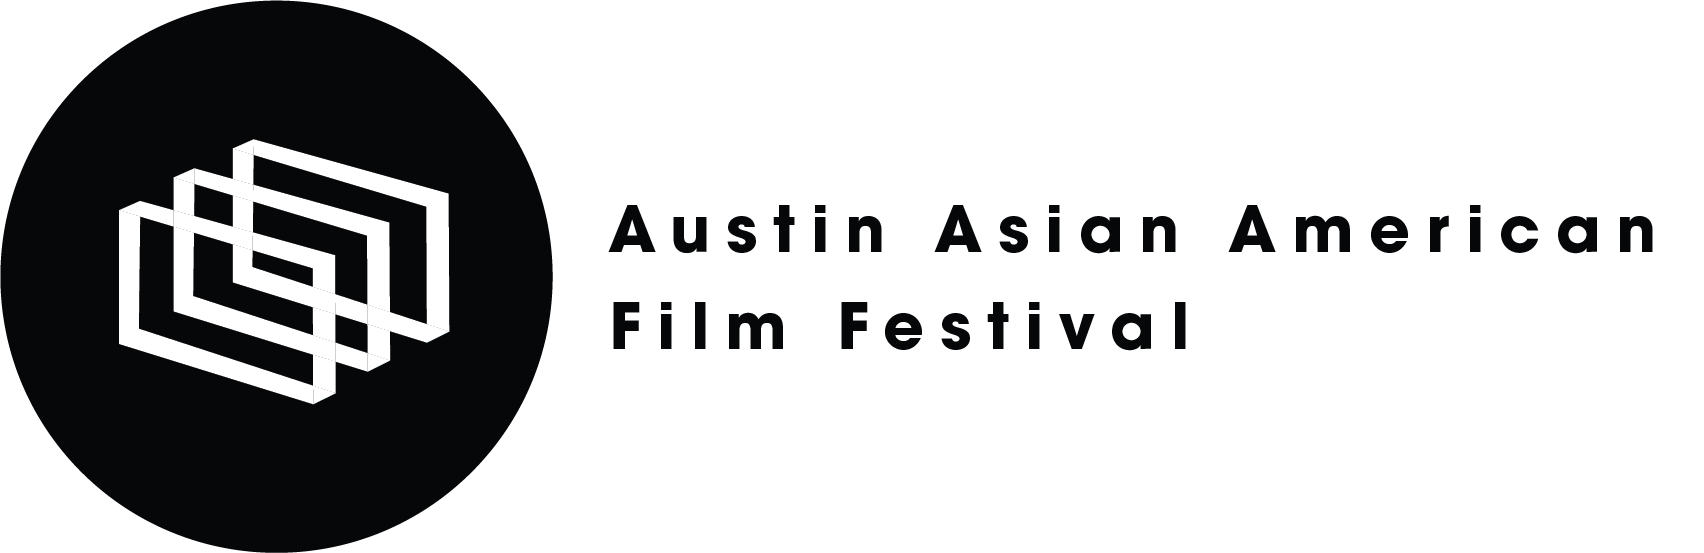 Austin Asian American Film Festival